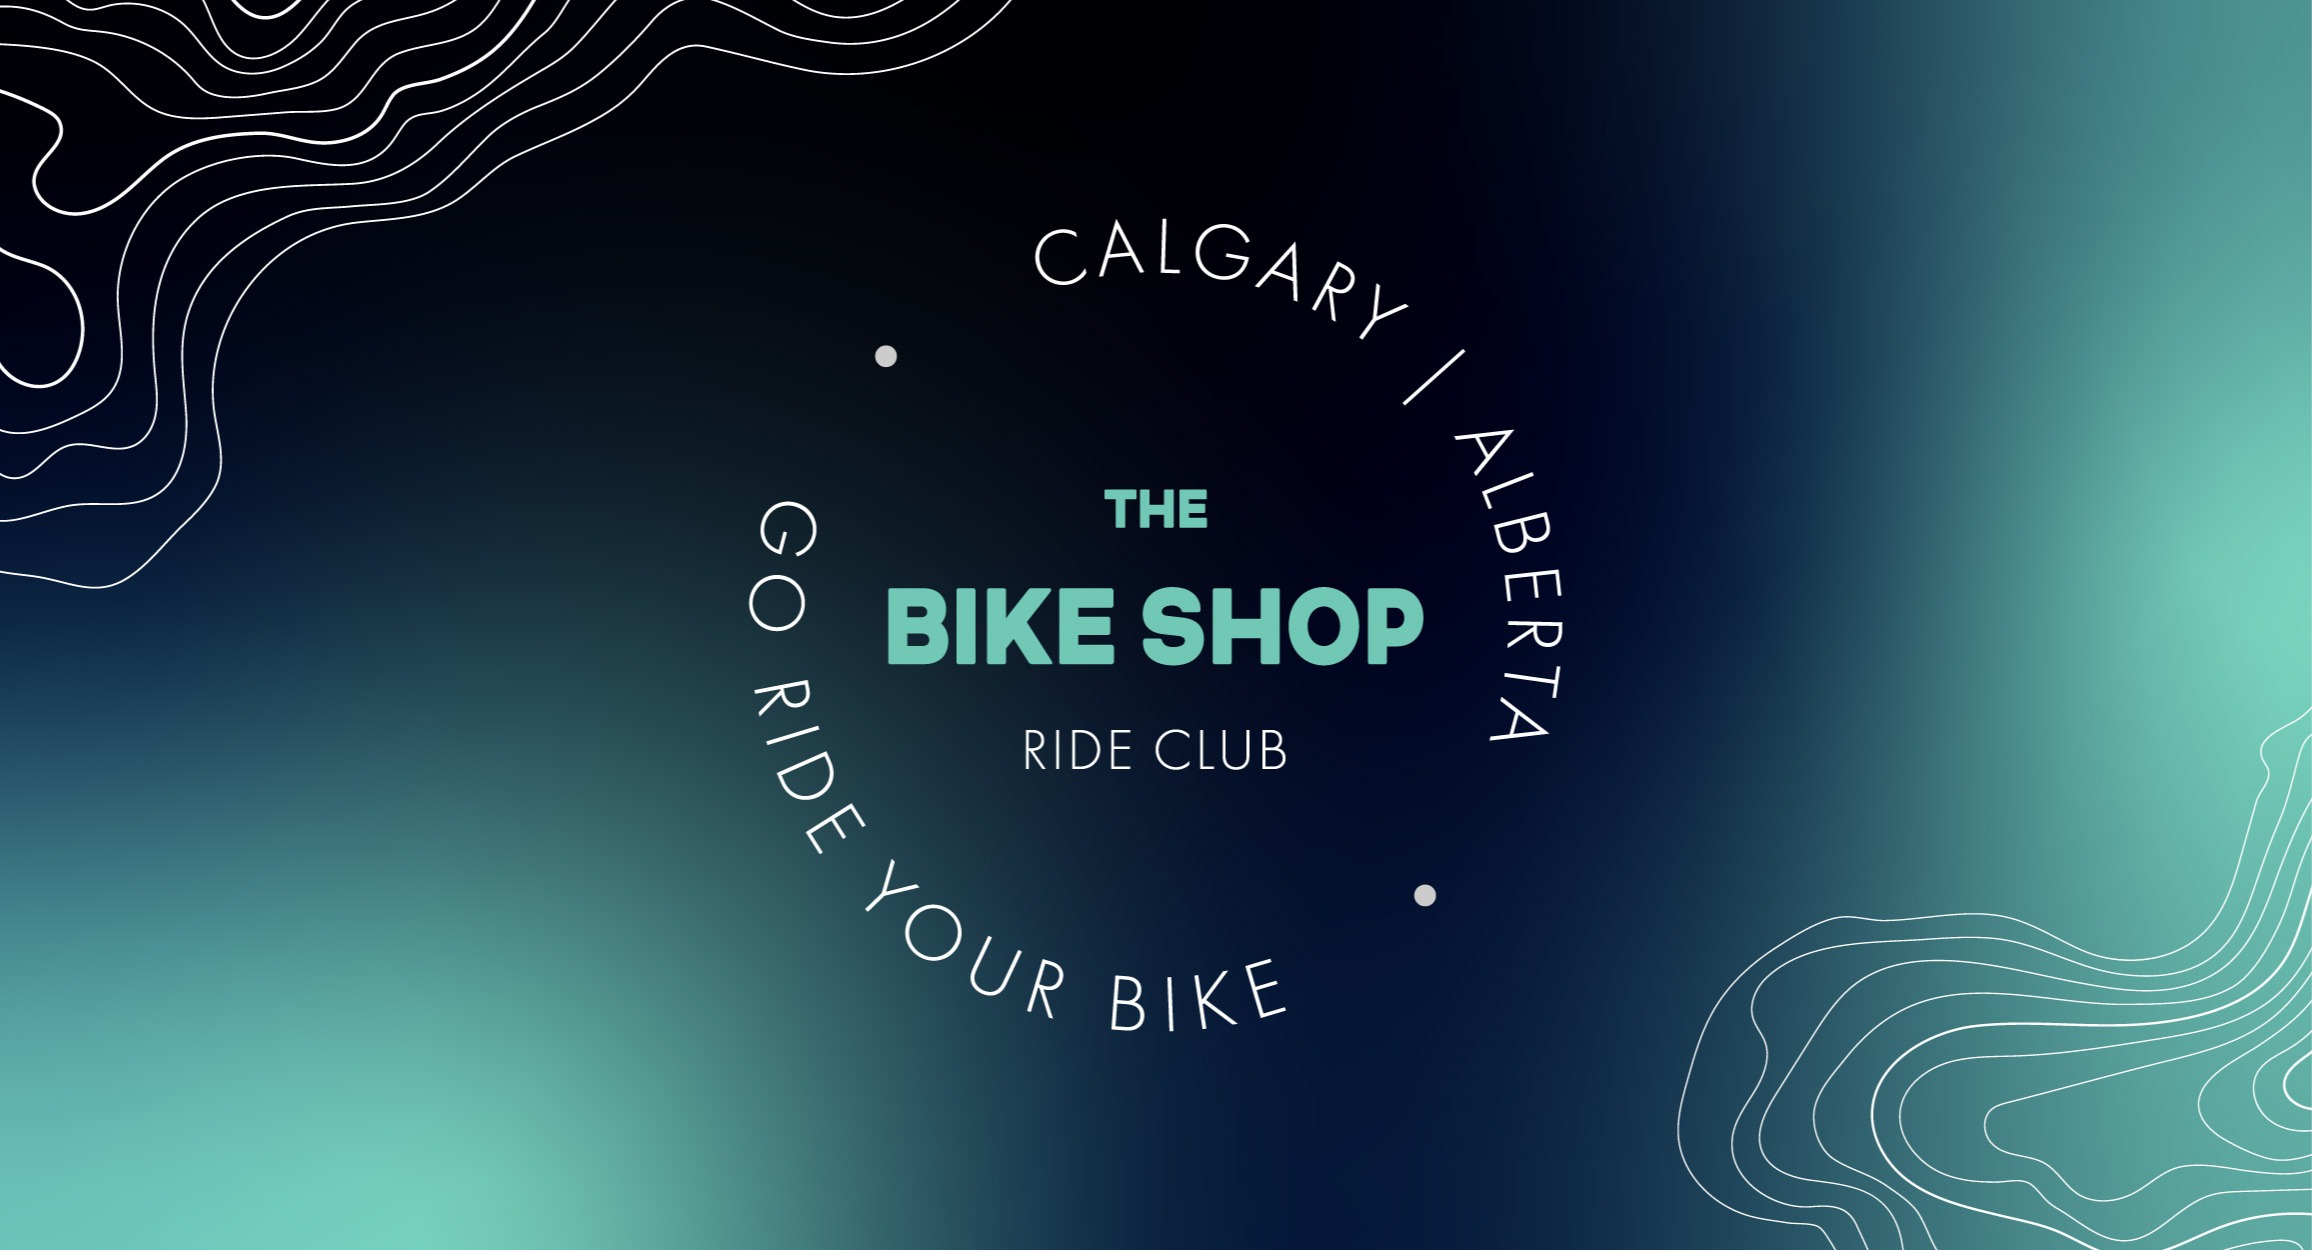 The Bike Shop Ride Club